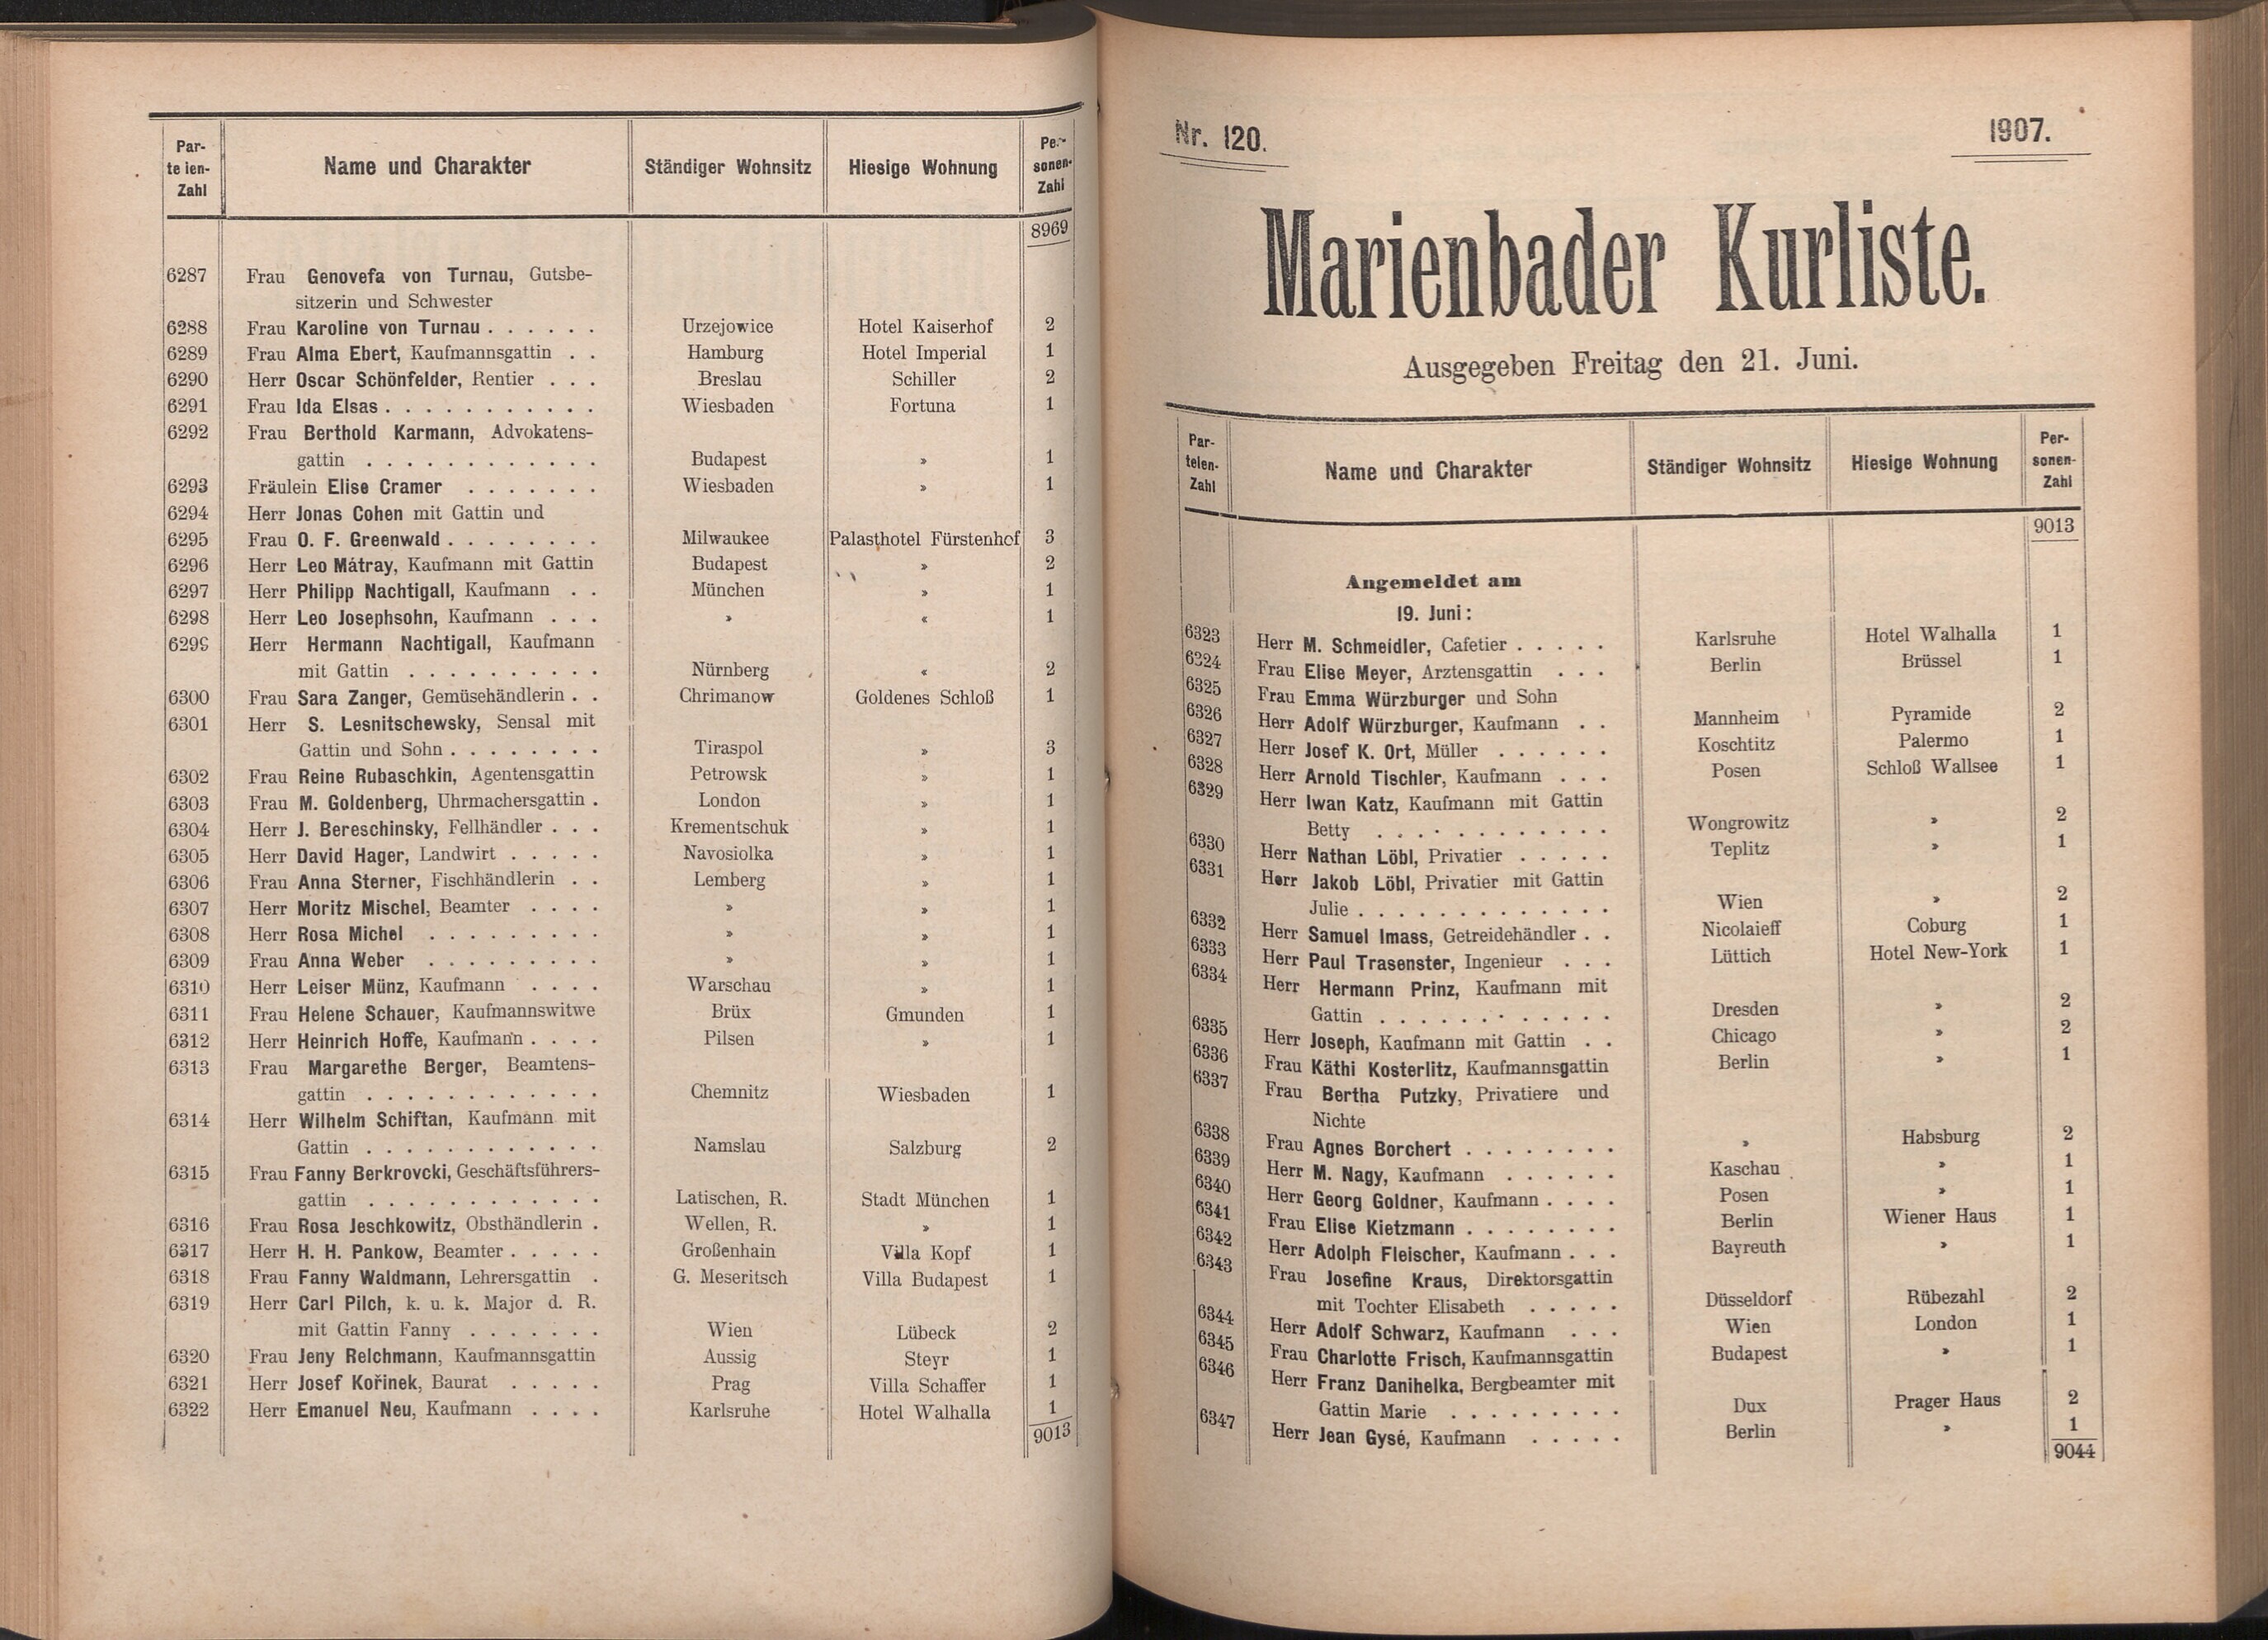 136. soap-ch_knihovna_marienbader-kurliste-1907_1360